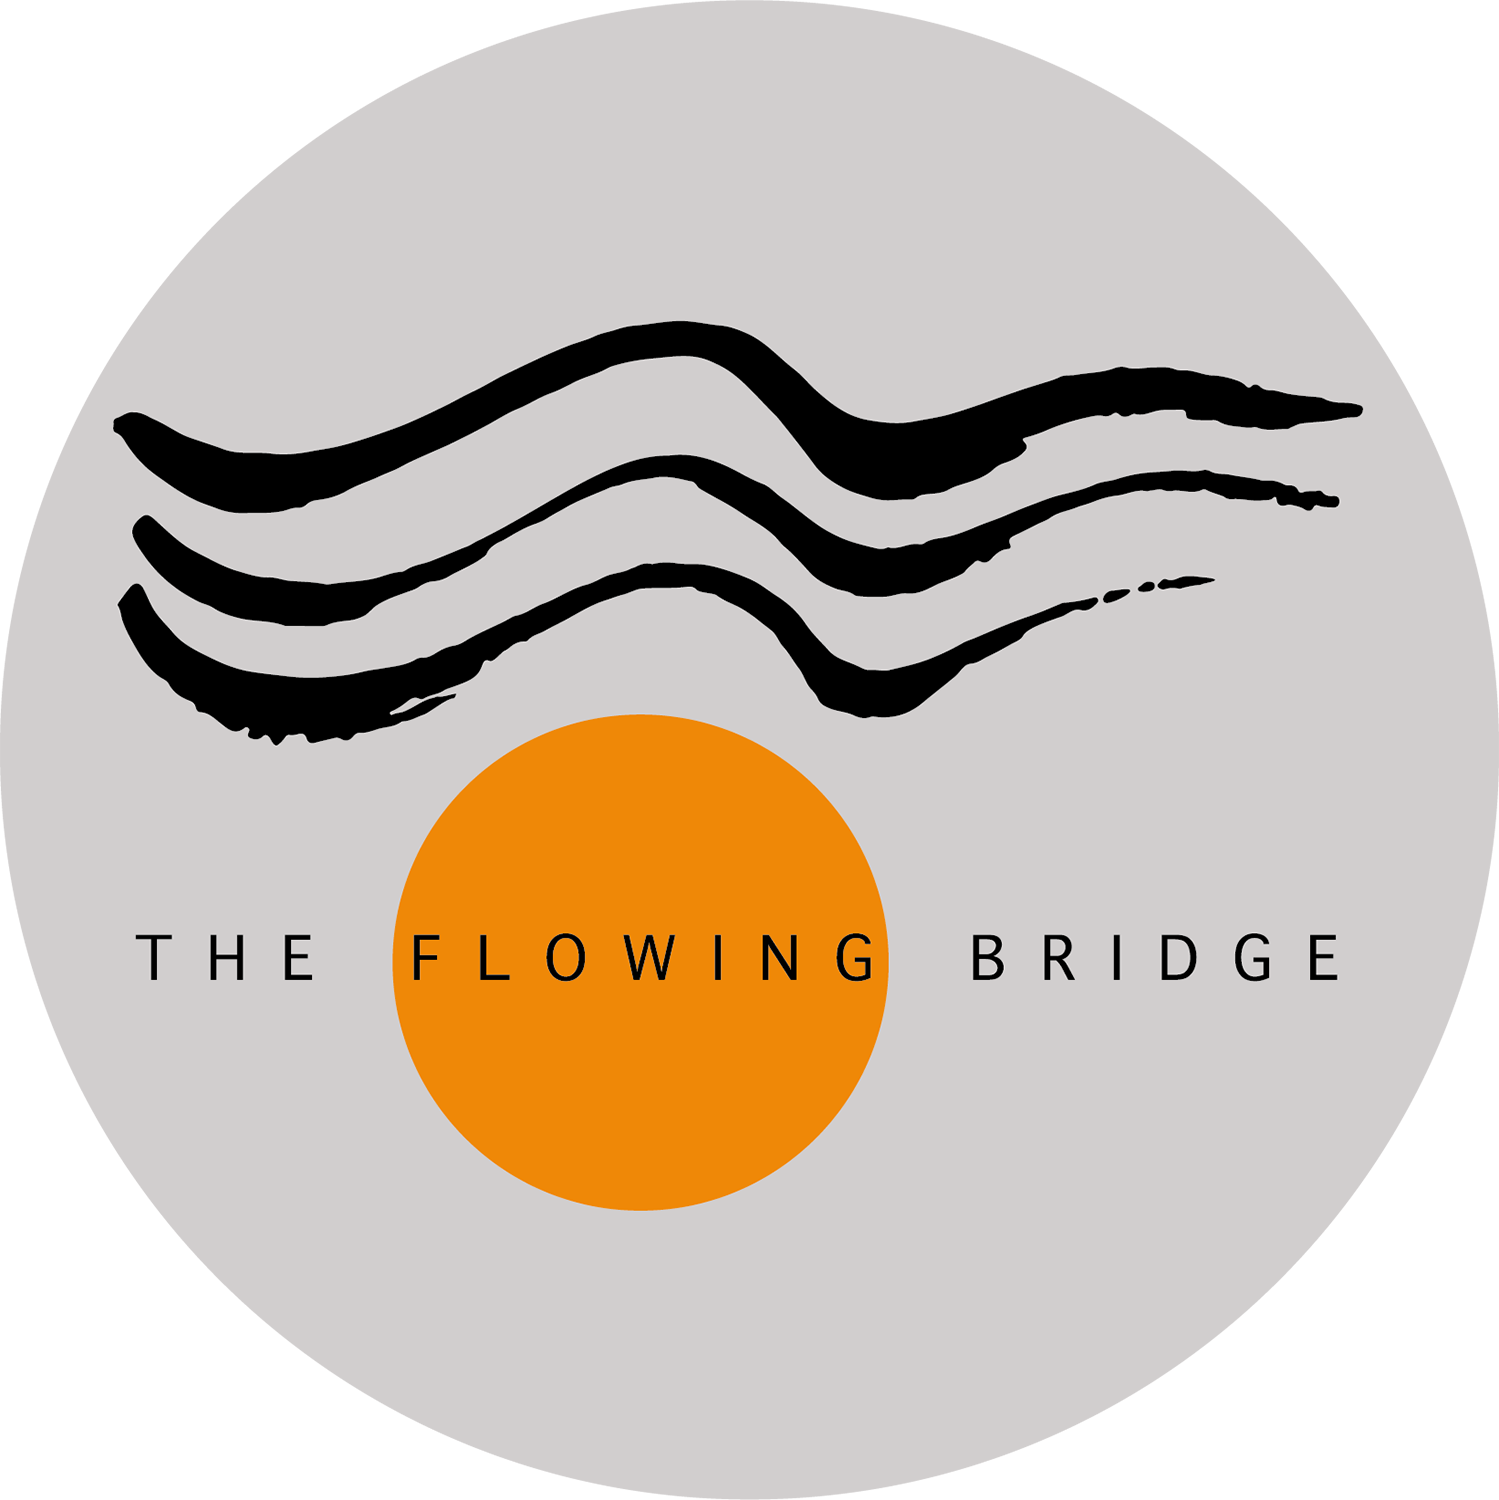 THE FLOWING BRIDGE